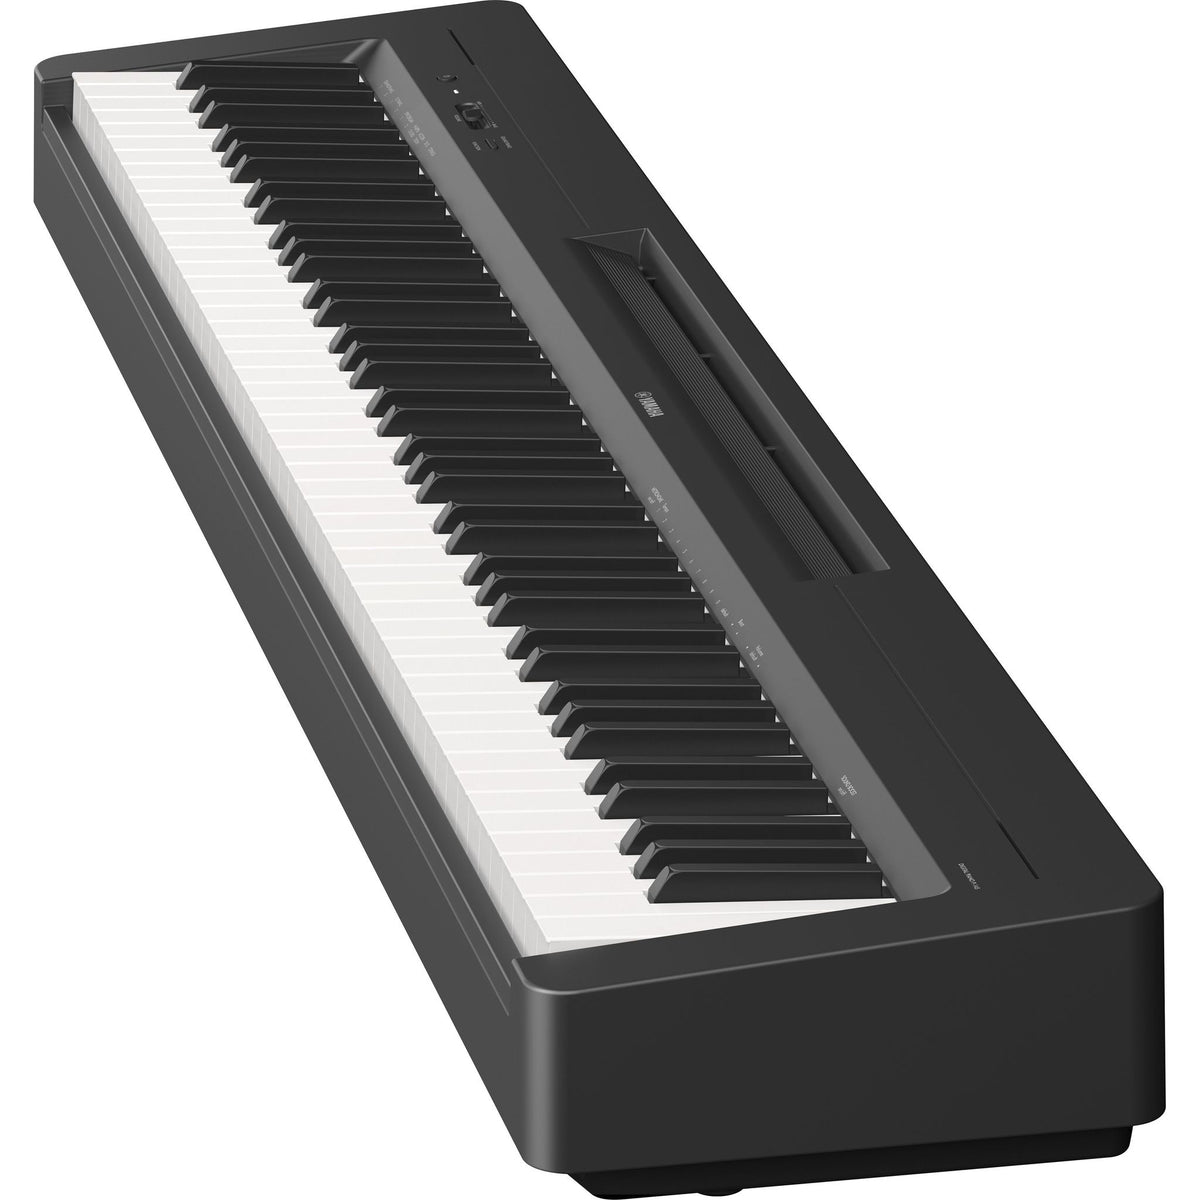 Yamaha P-145 Portable Digital Piano